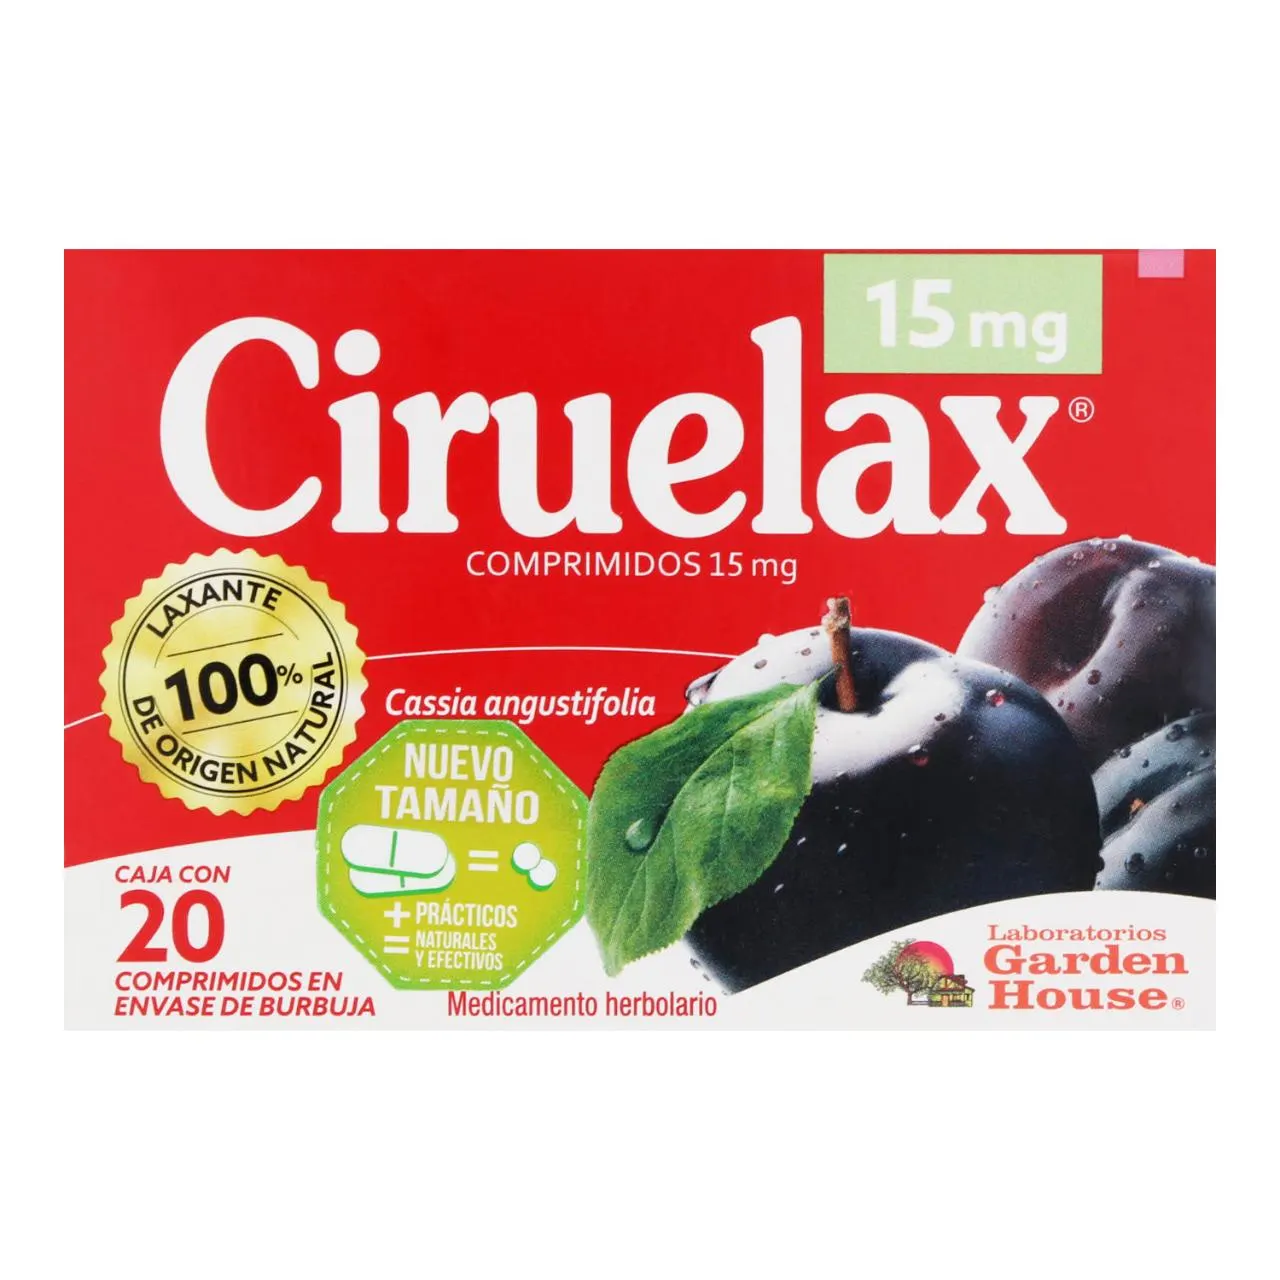 Comprar Ciruelax Con 20 Comprimidos